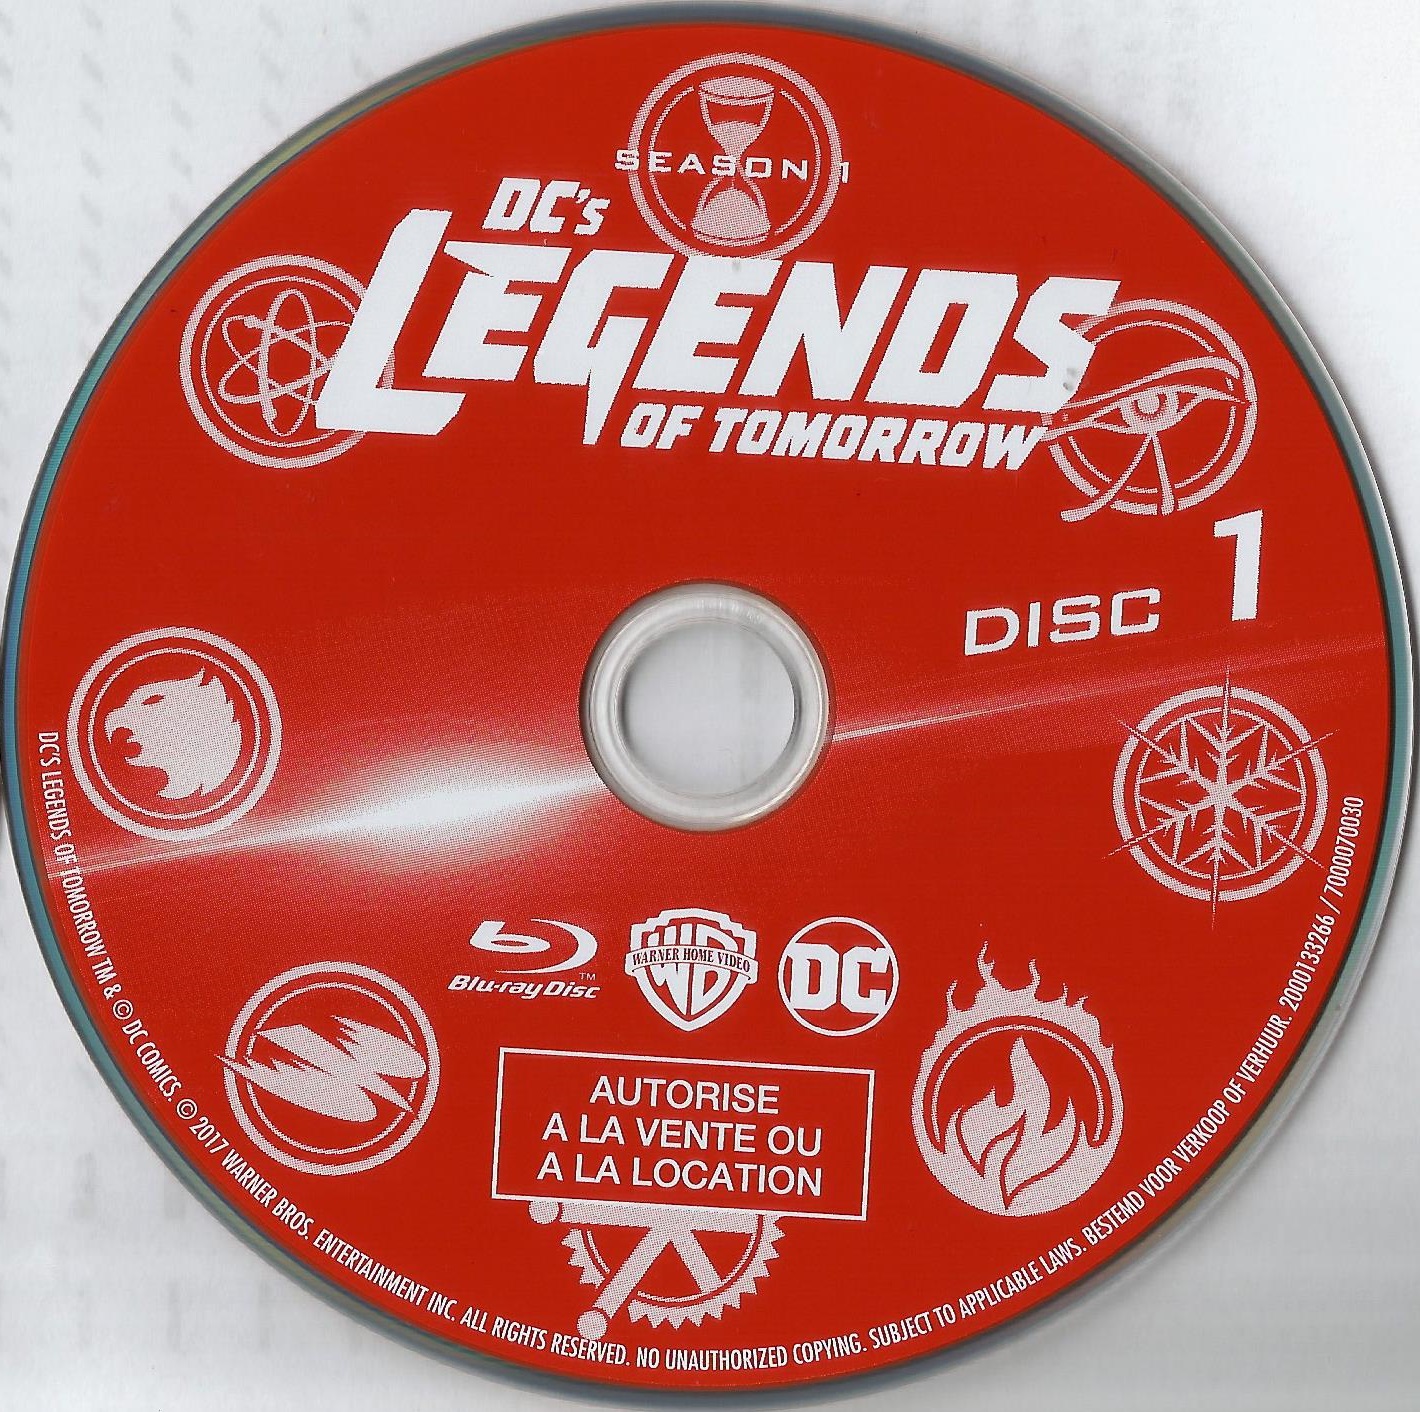 Legends of tomorrow saison 1 DISC 1 (BLU-RAY)